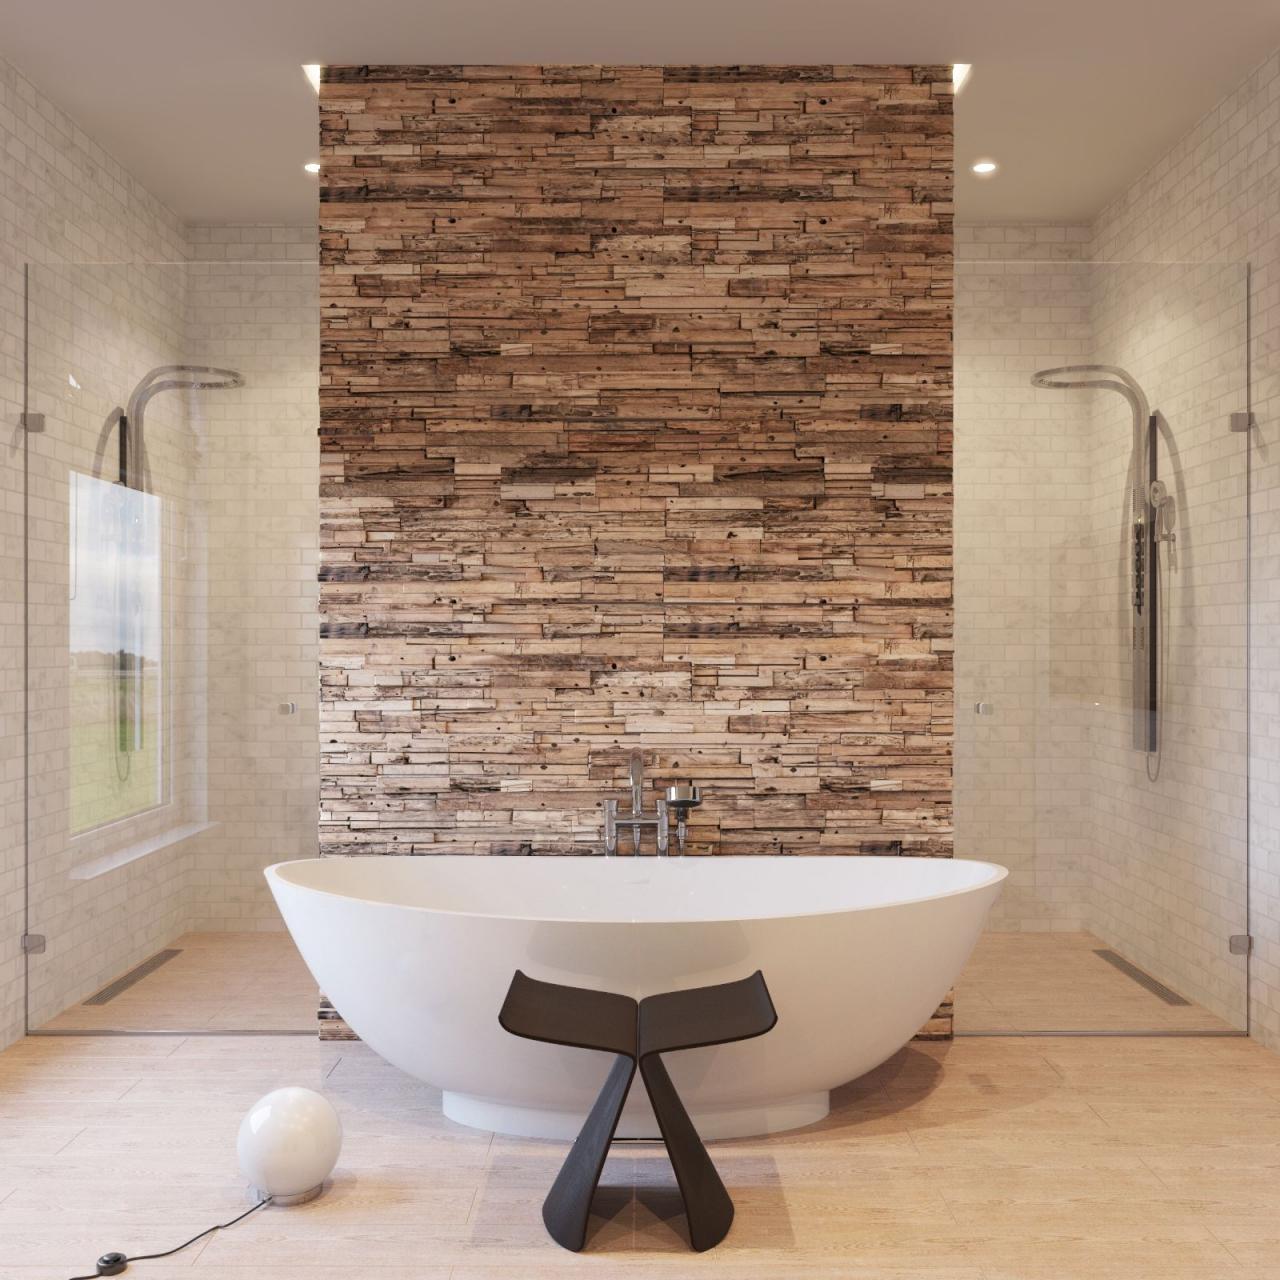 Awasome Wood Tile Feature Wall Bathroom Ideas